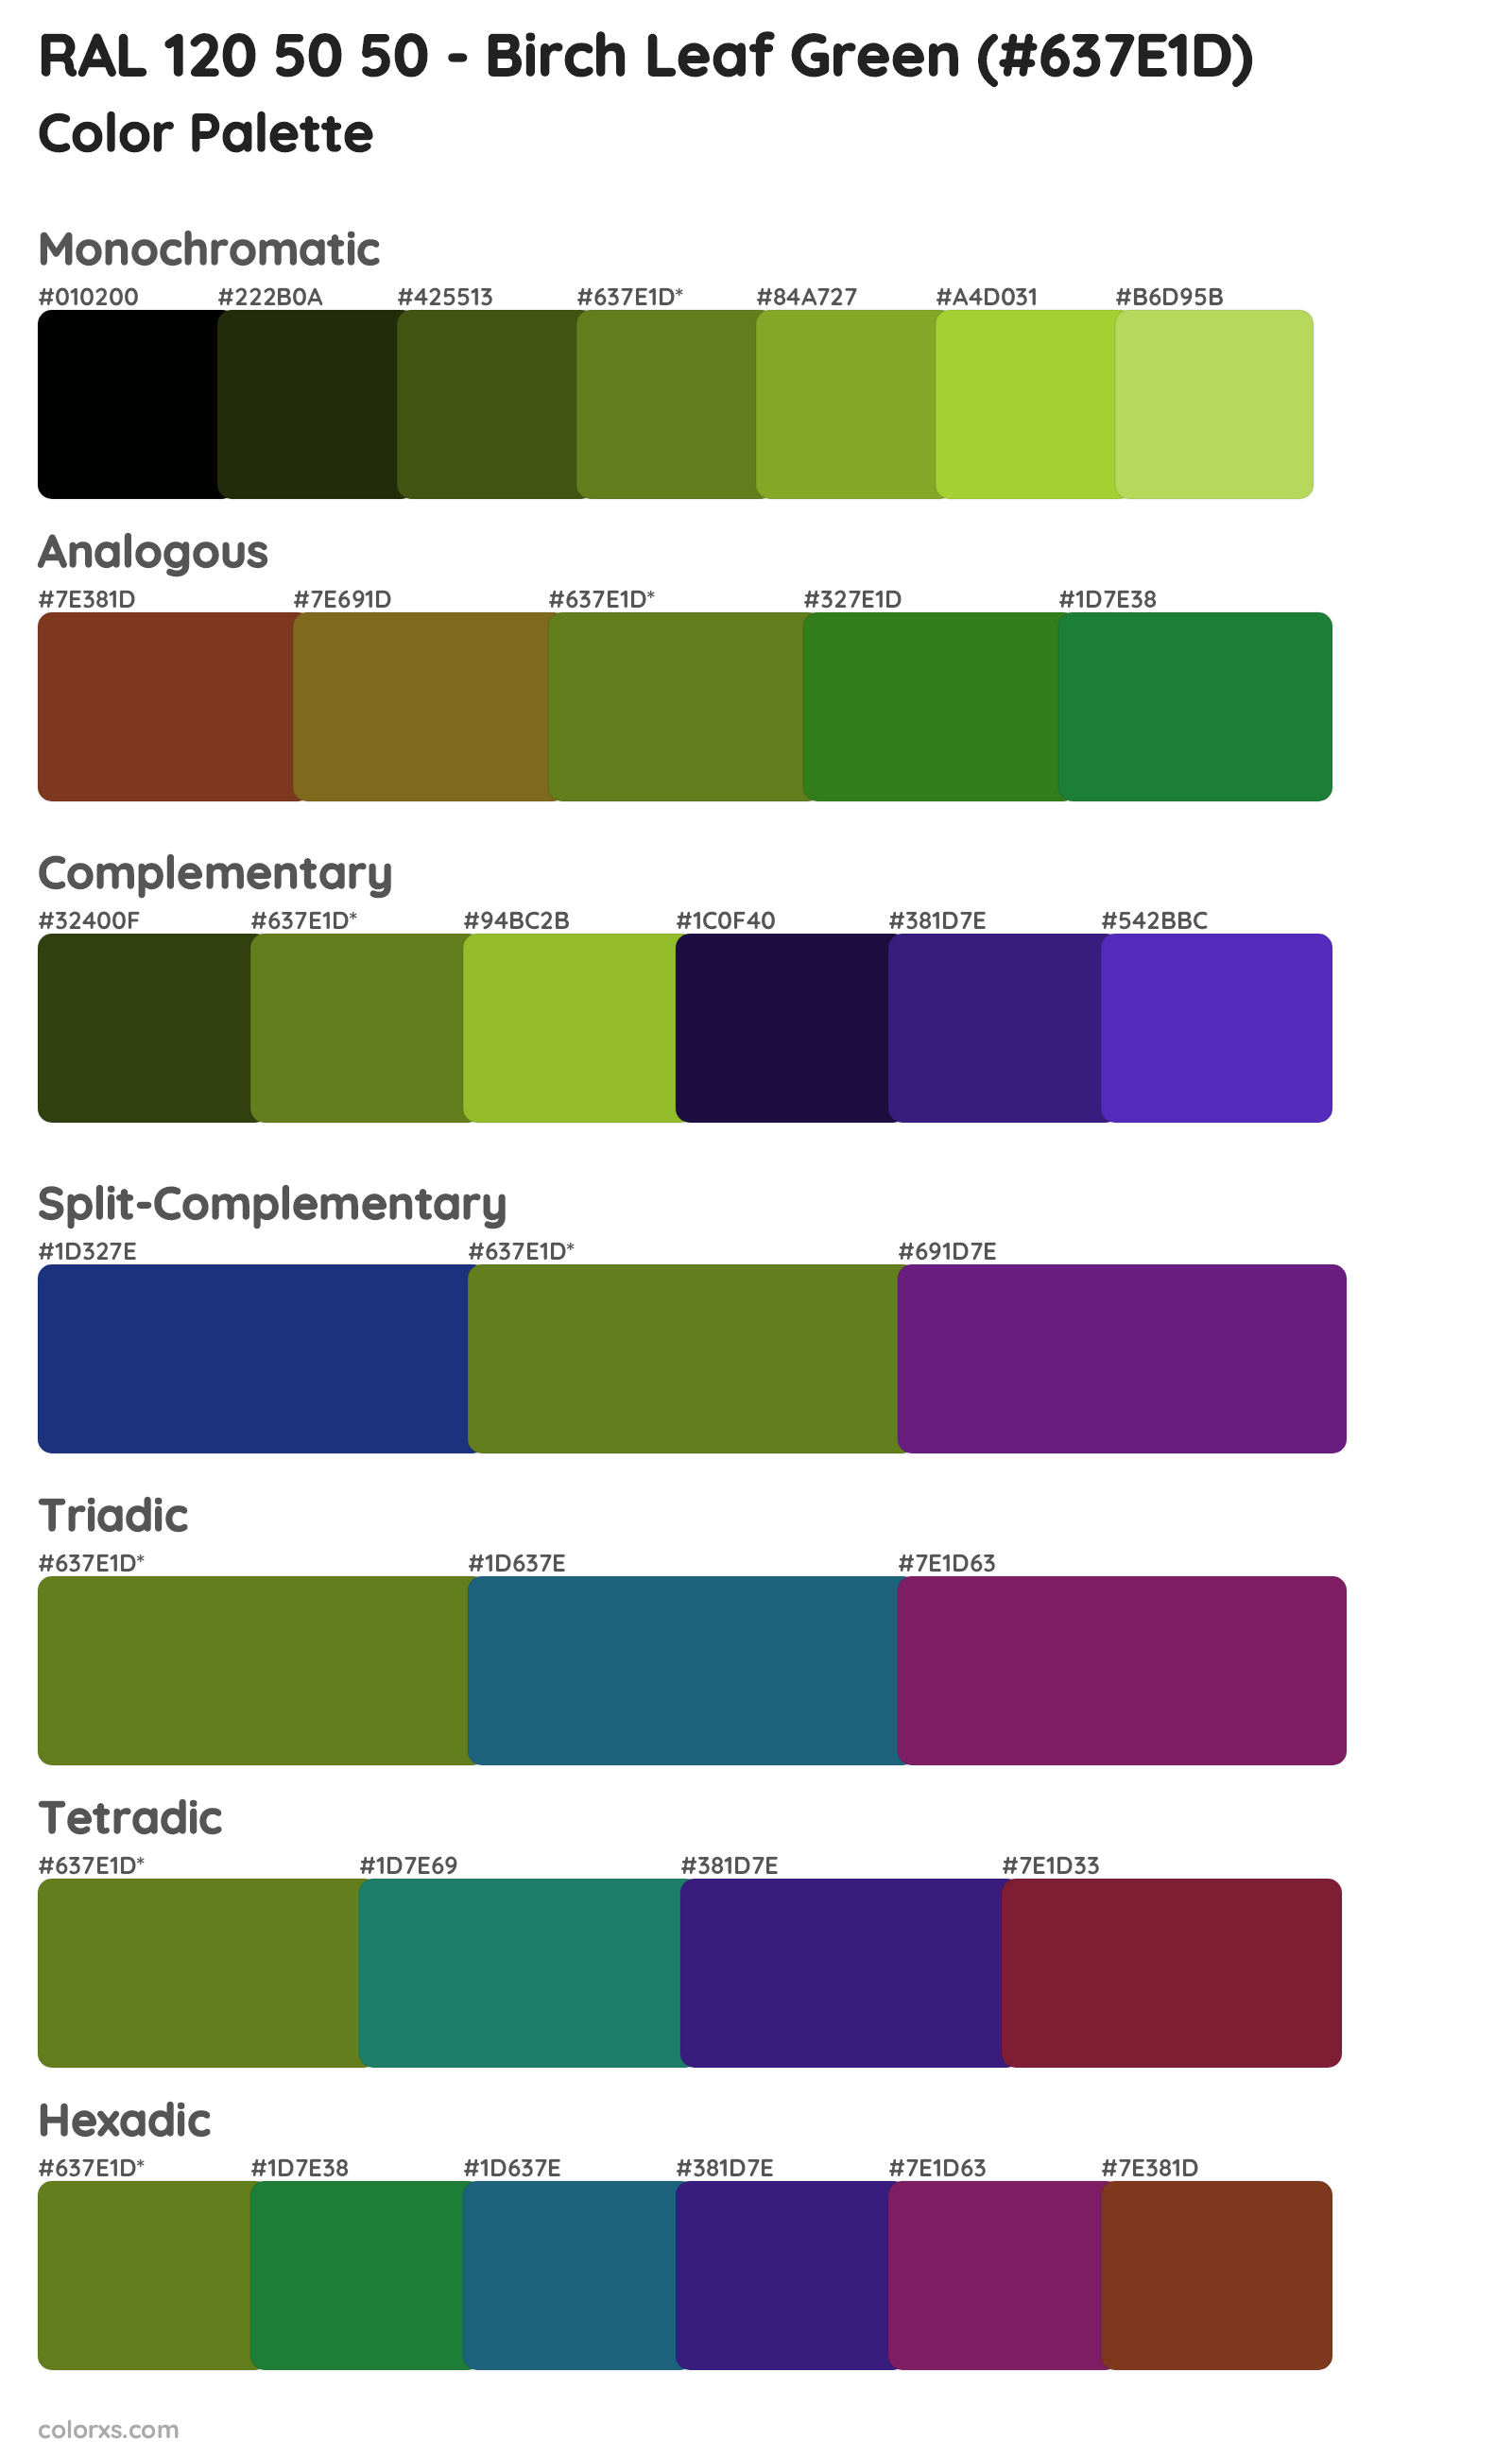 RAL 120 50 50 - Birch Leaf Green Color Scheme Palettes